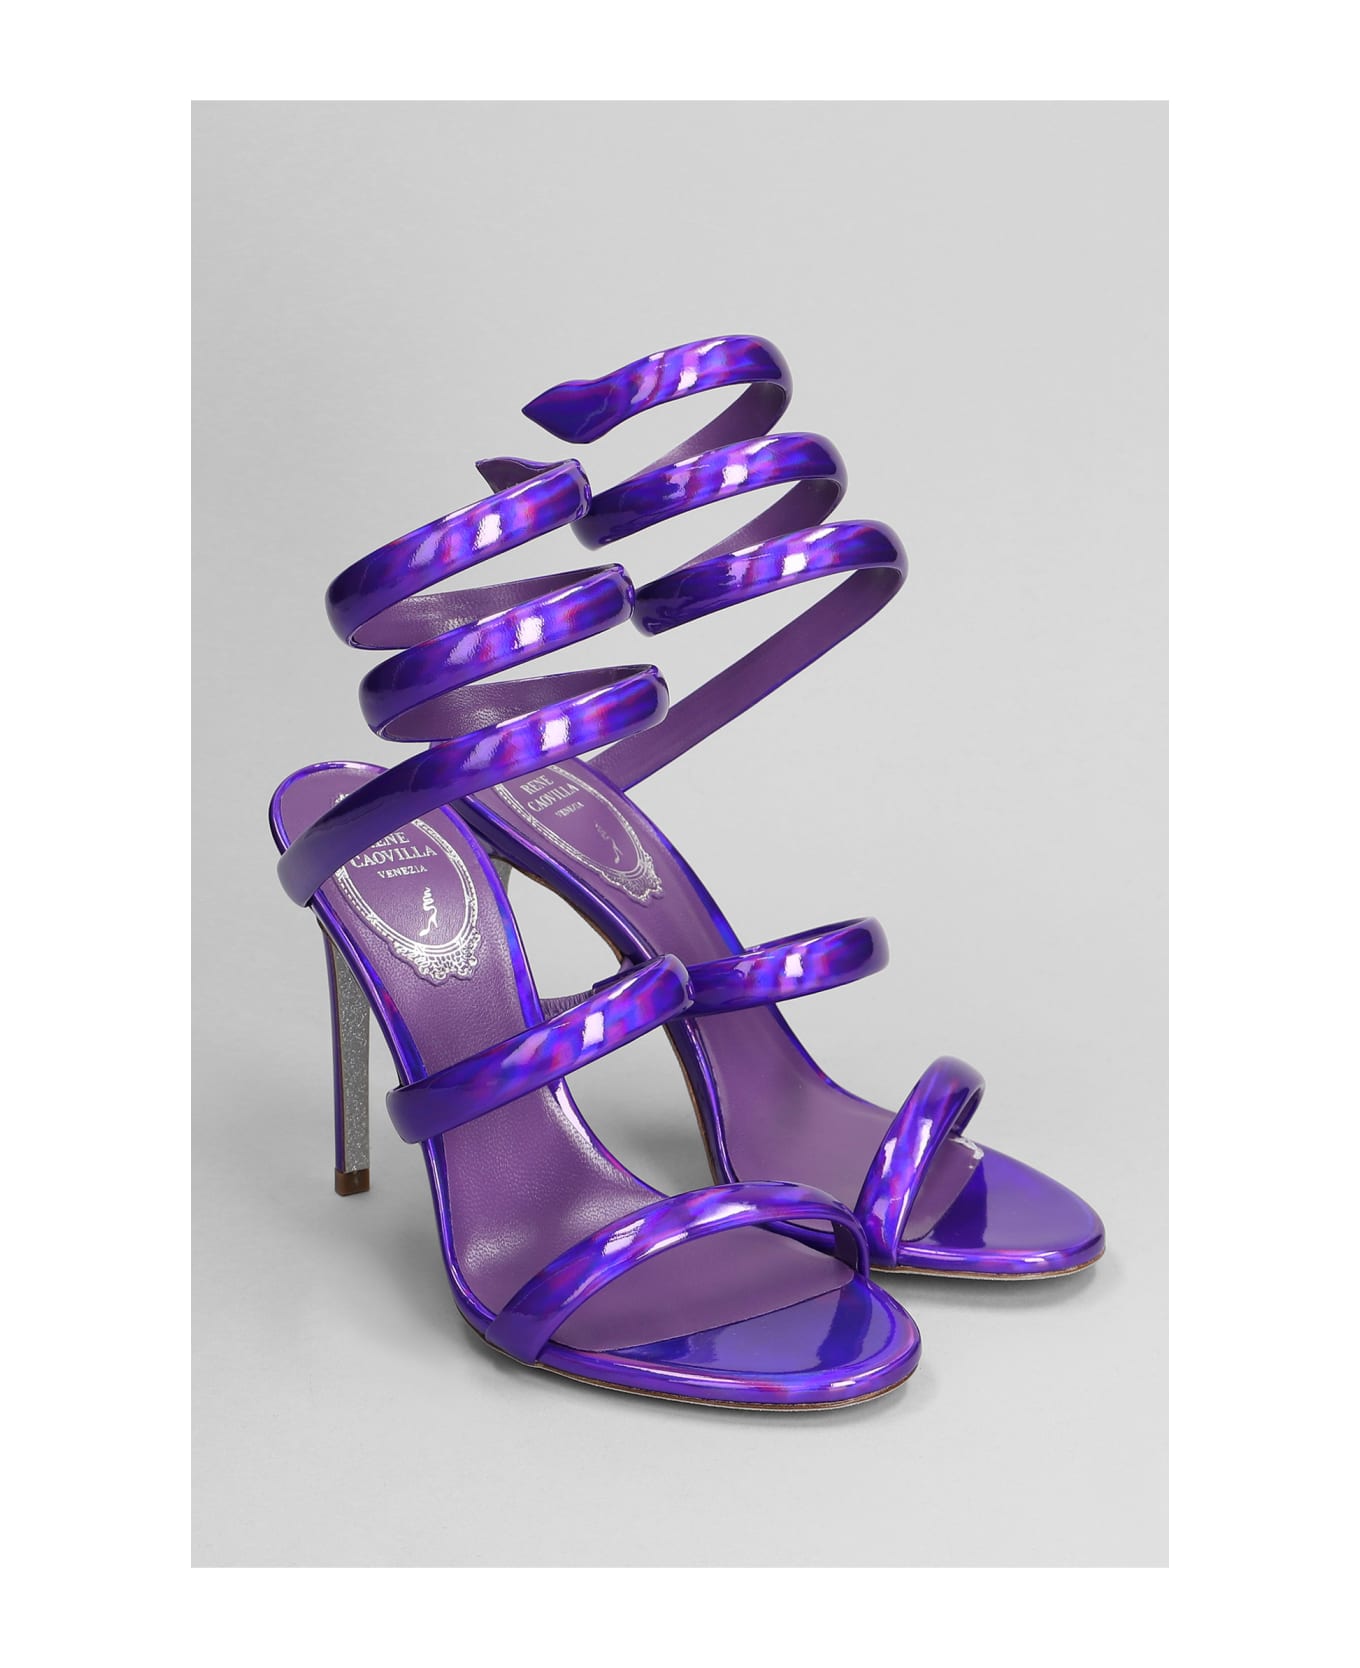 René Caovilla Cleo Sandals In Viola Patent Leather - Viola